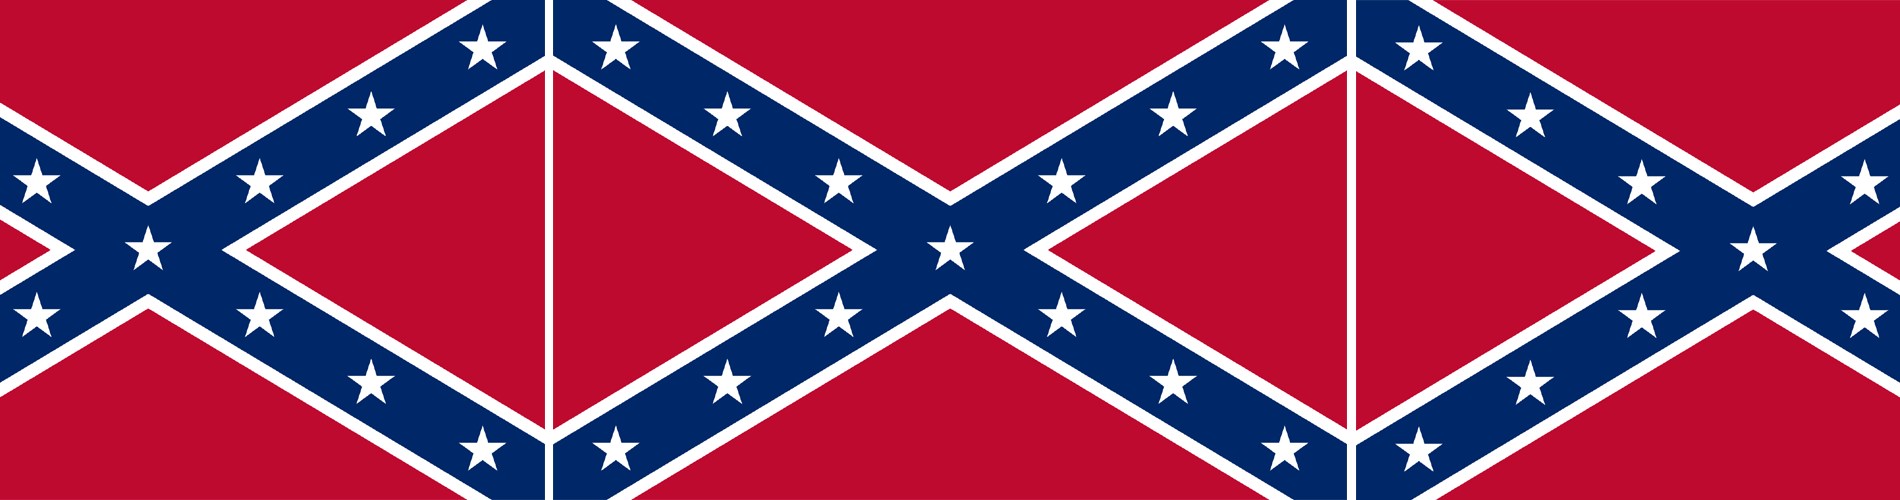 realtor promotes confederate flag